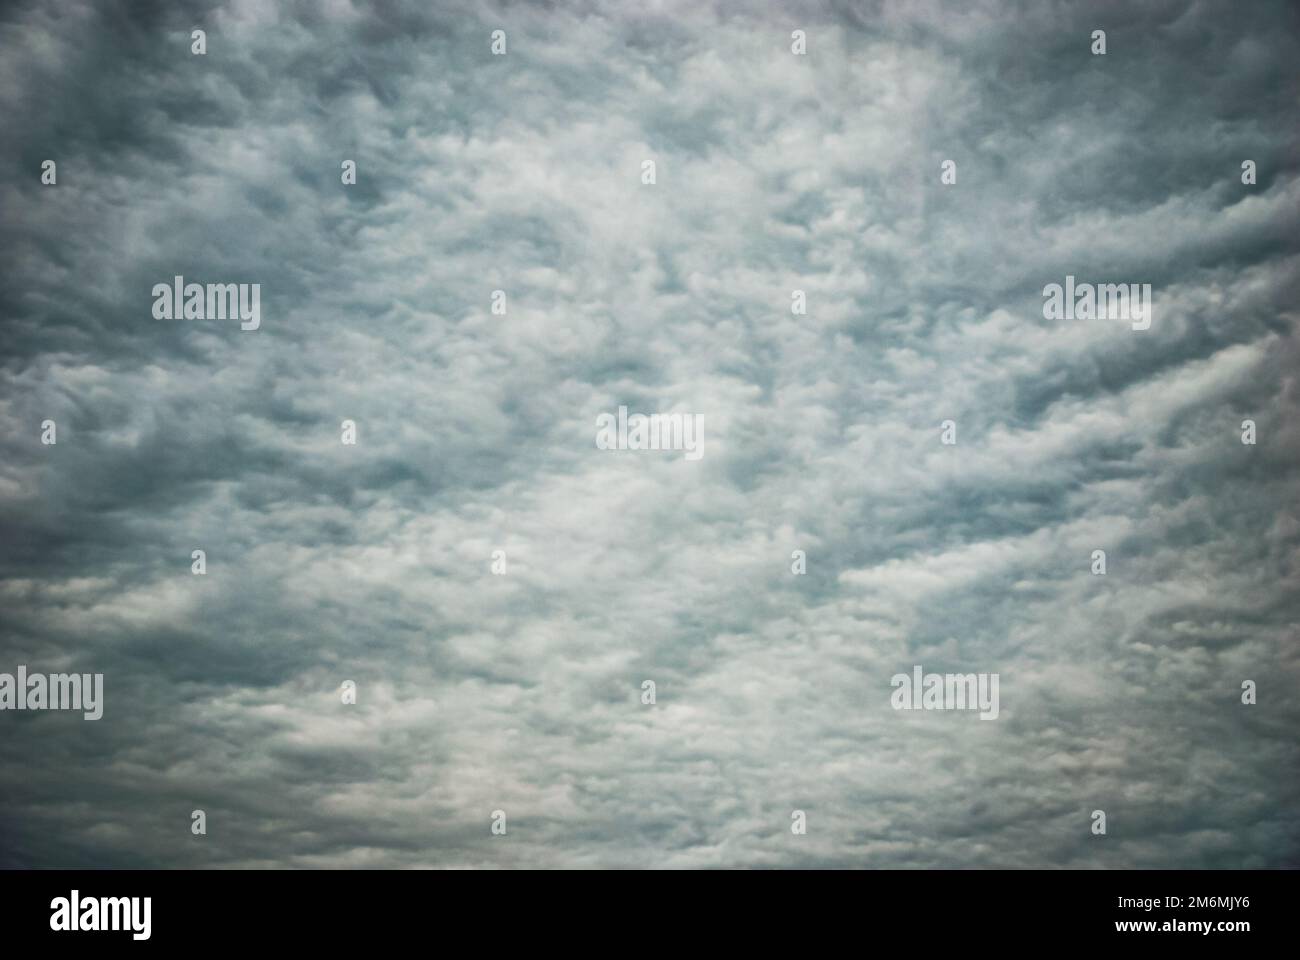 Moody bewölkt Himmel Hintergrund, flauschige Wolken Textur, ominösen Himmel bei kaltem windigem Wetter Stockfoto